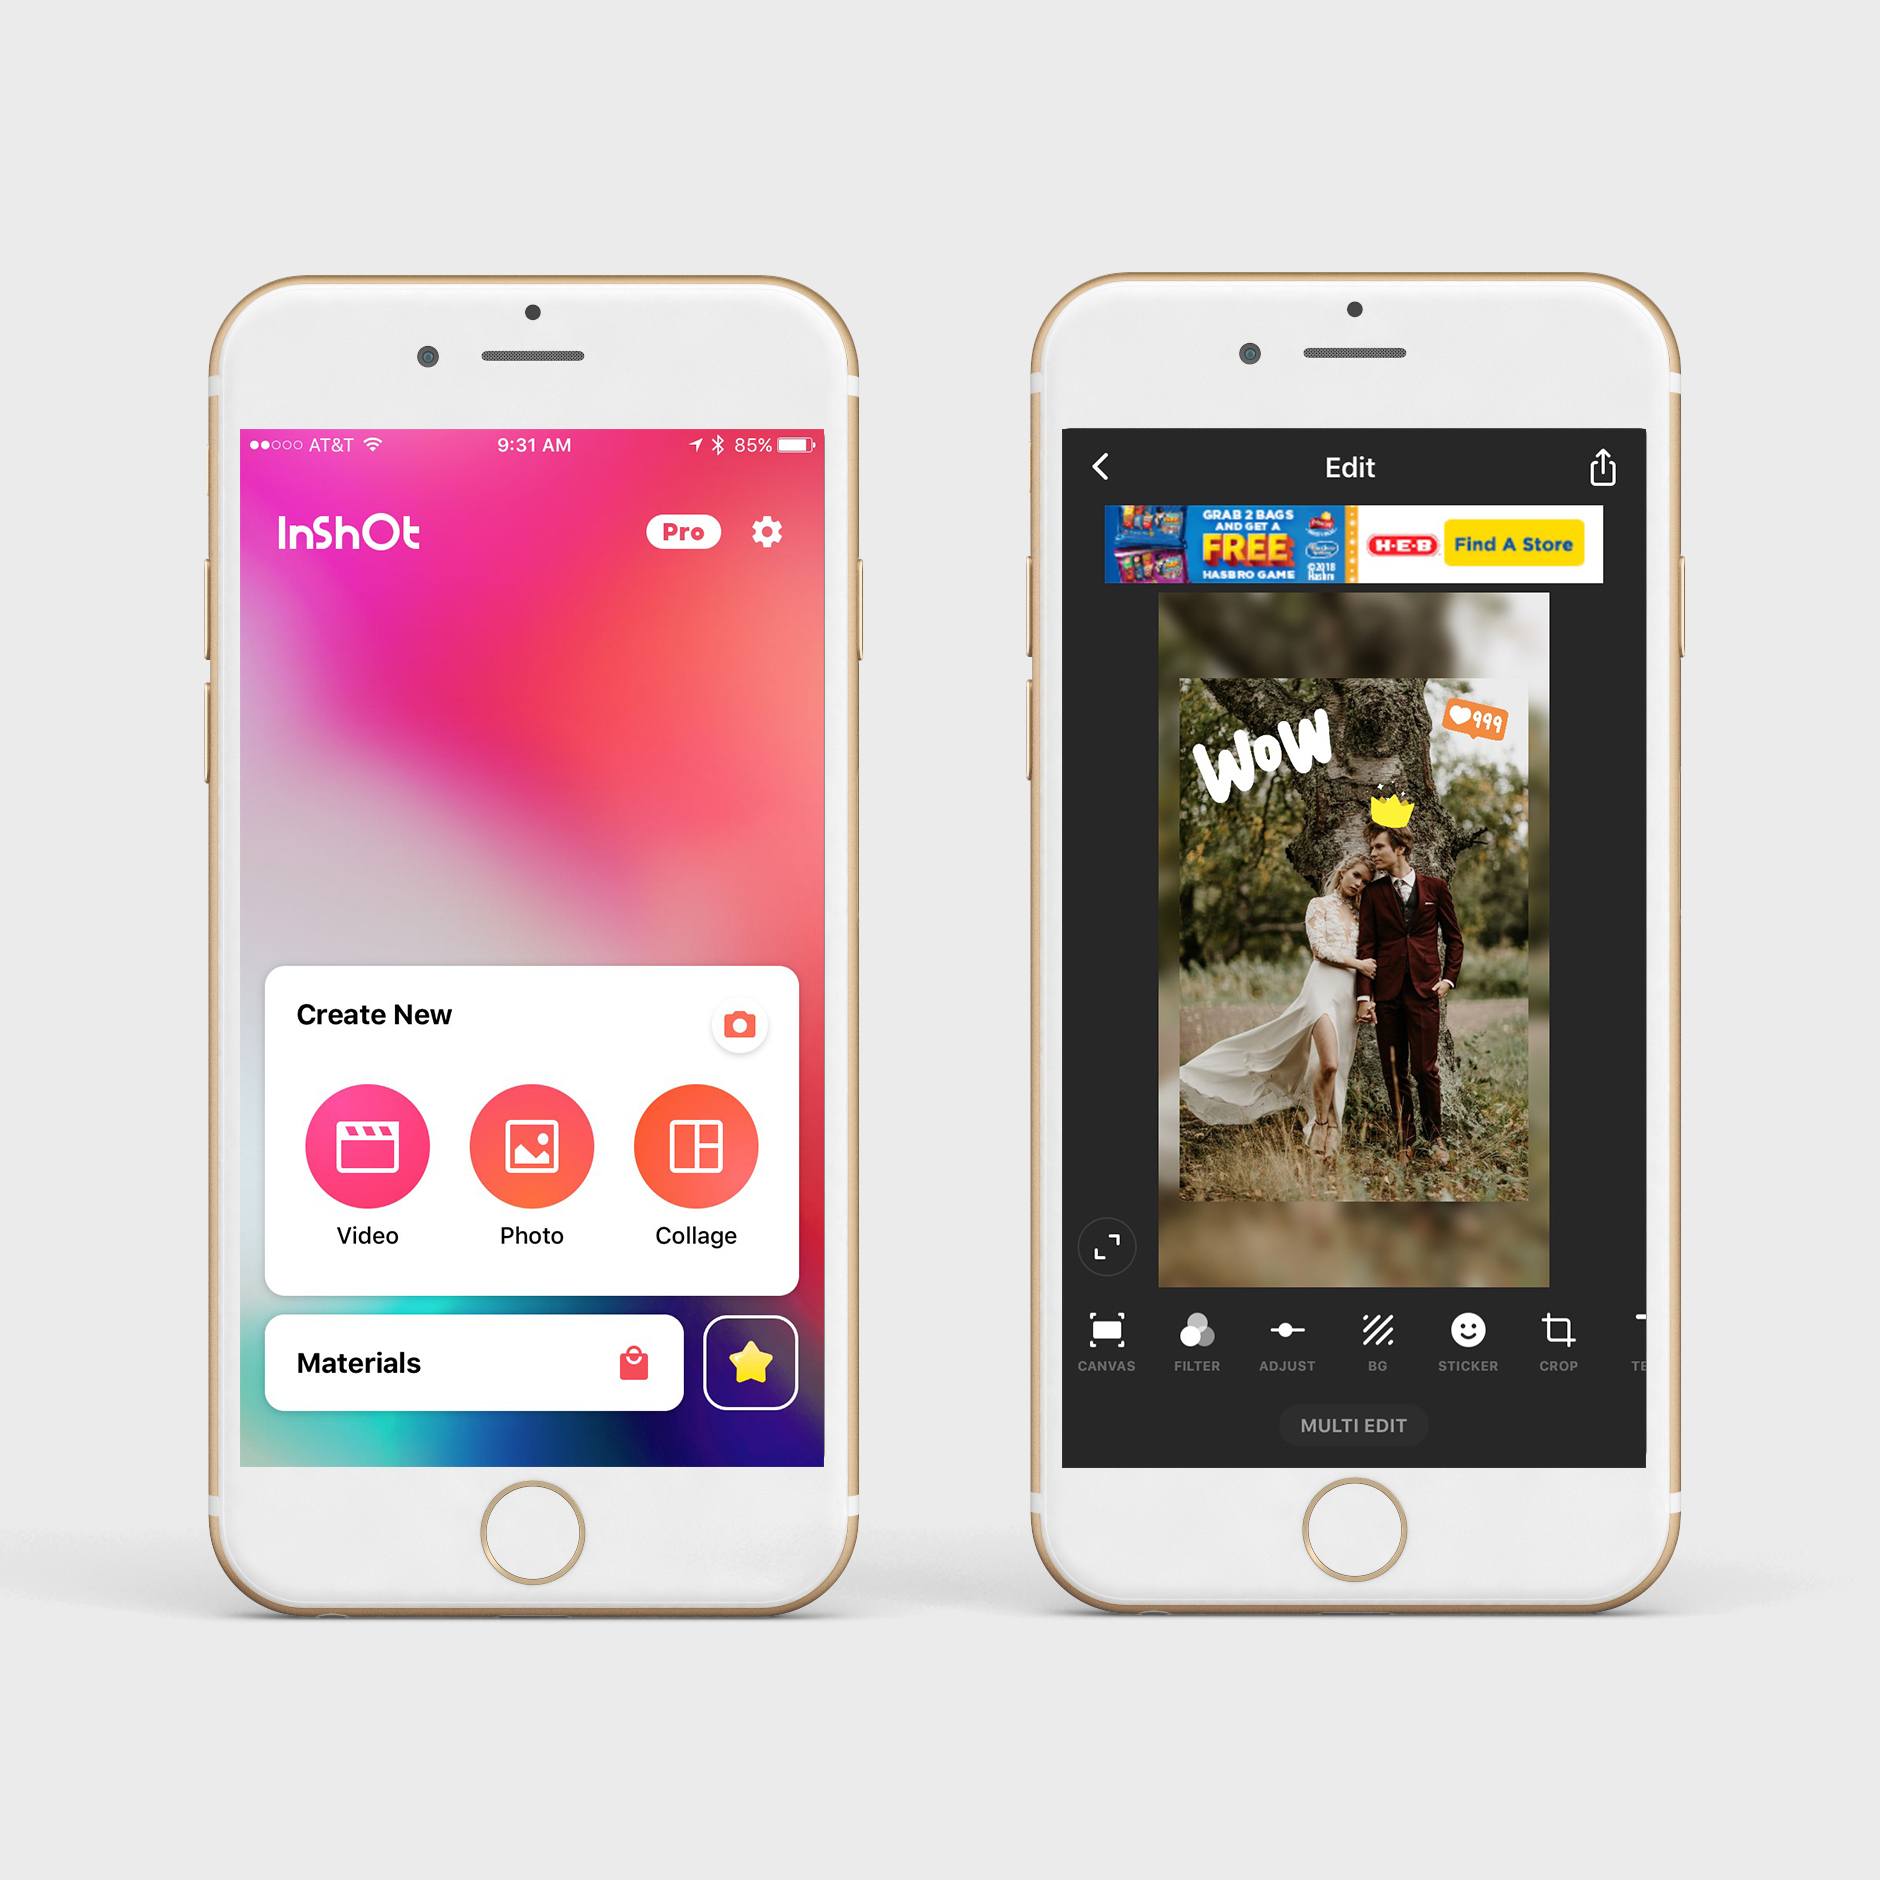 InShot is an app for Instagram Stories